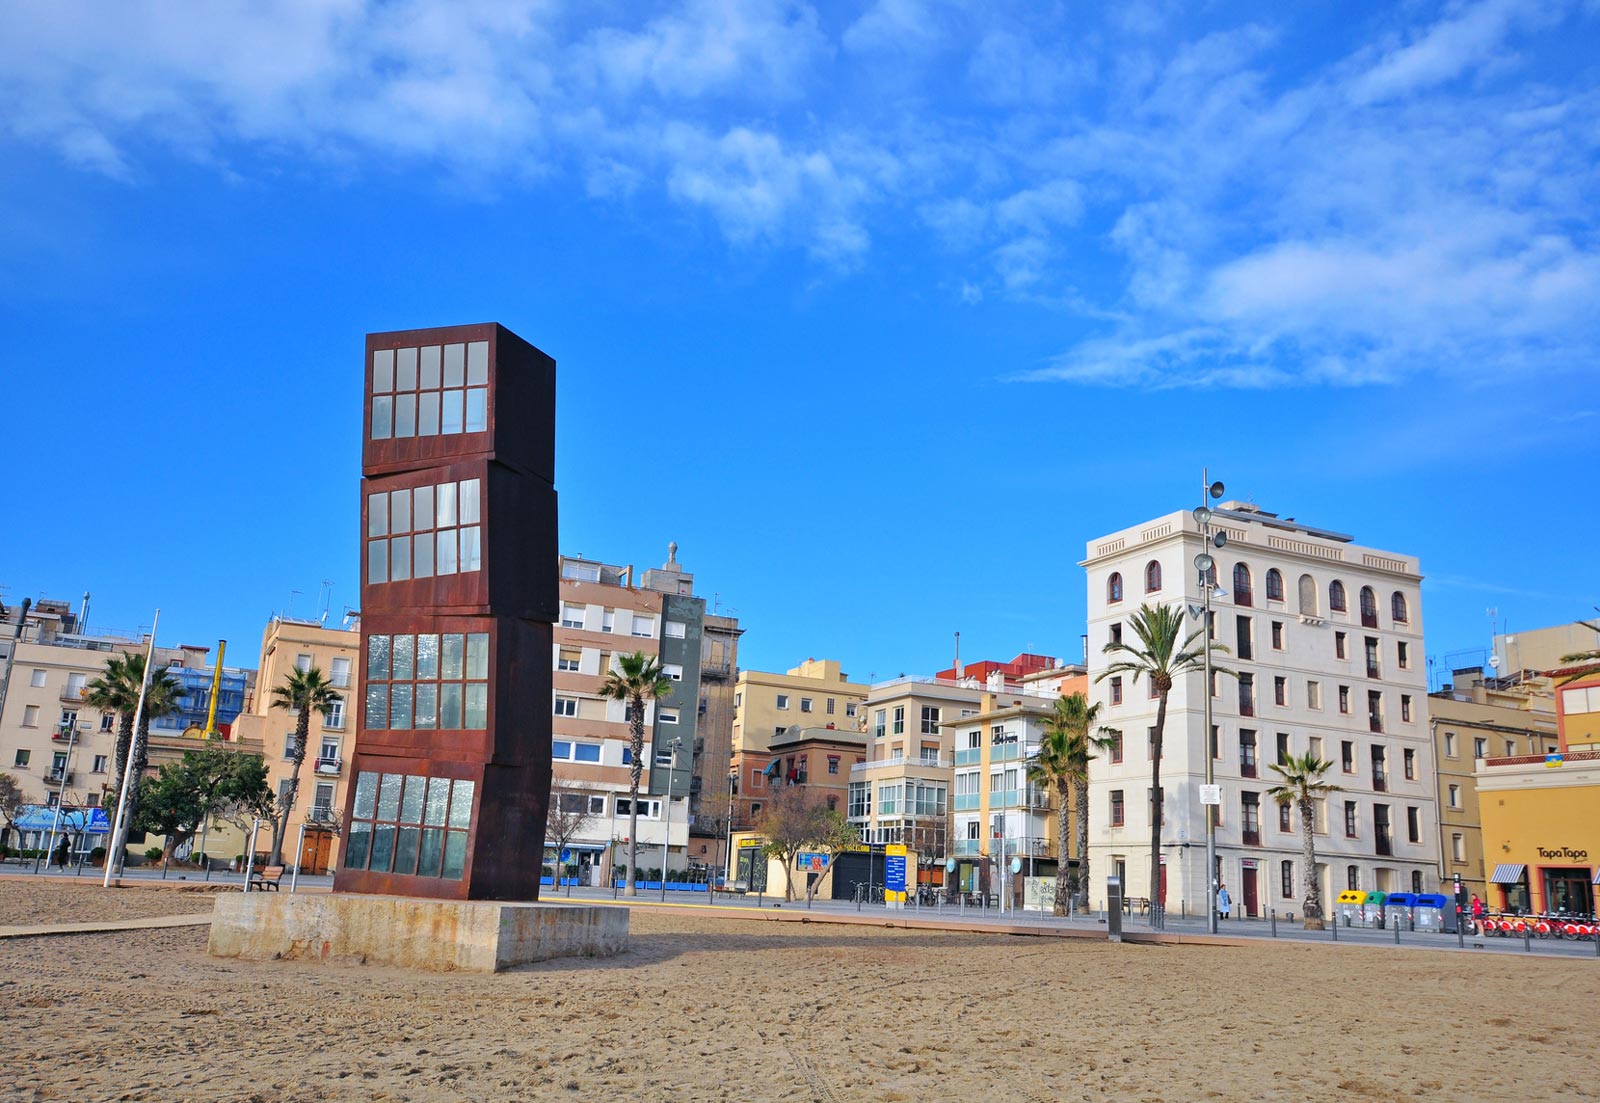 Barcelona tourist apartments: Situation April 2016